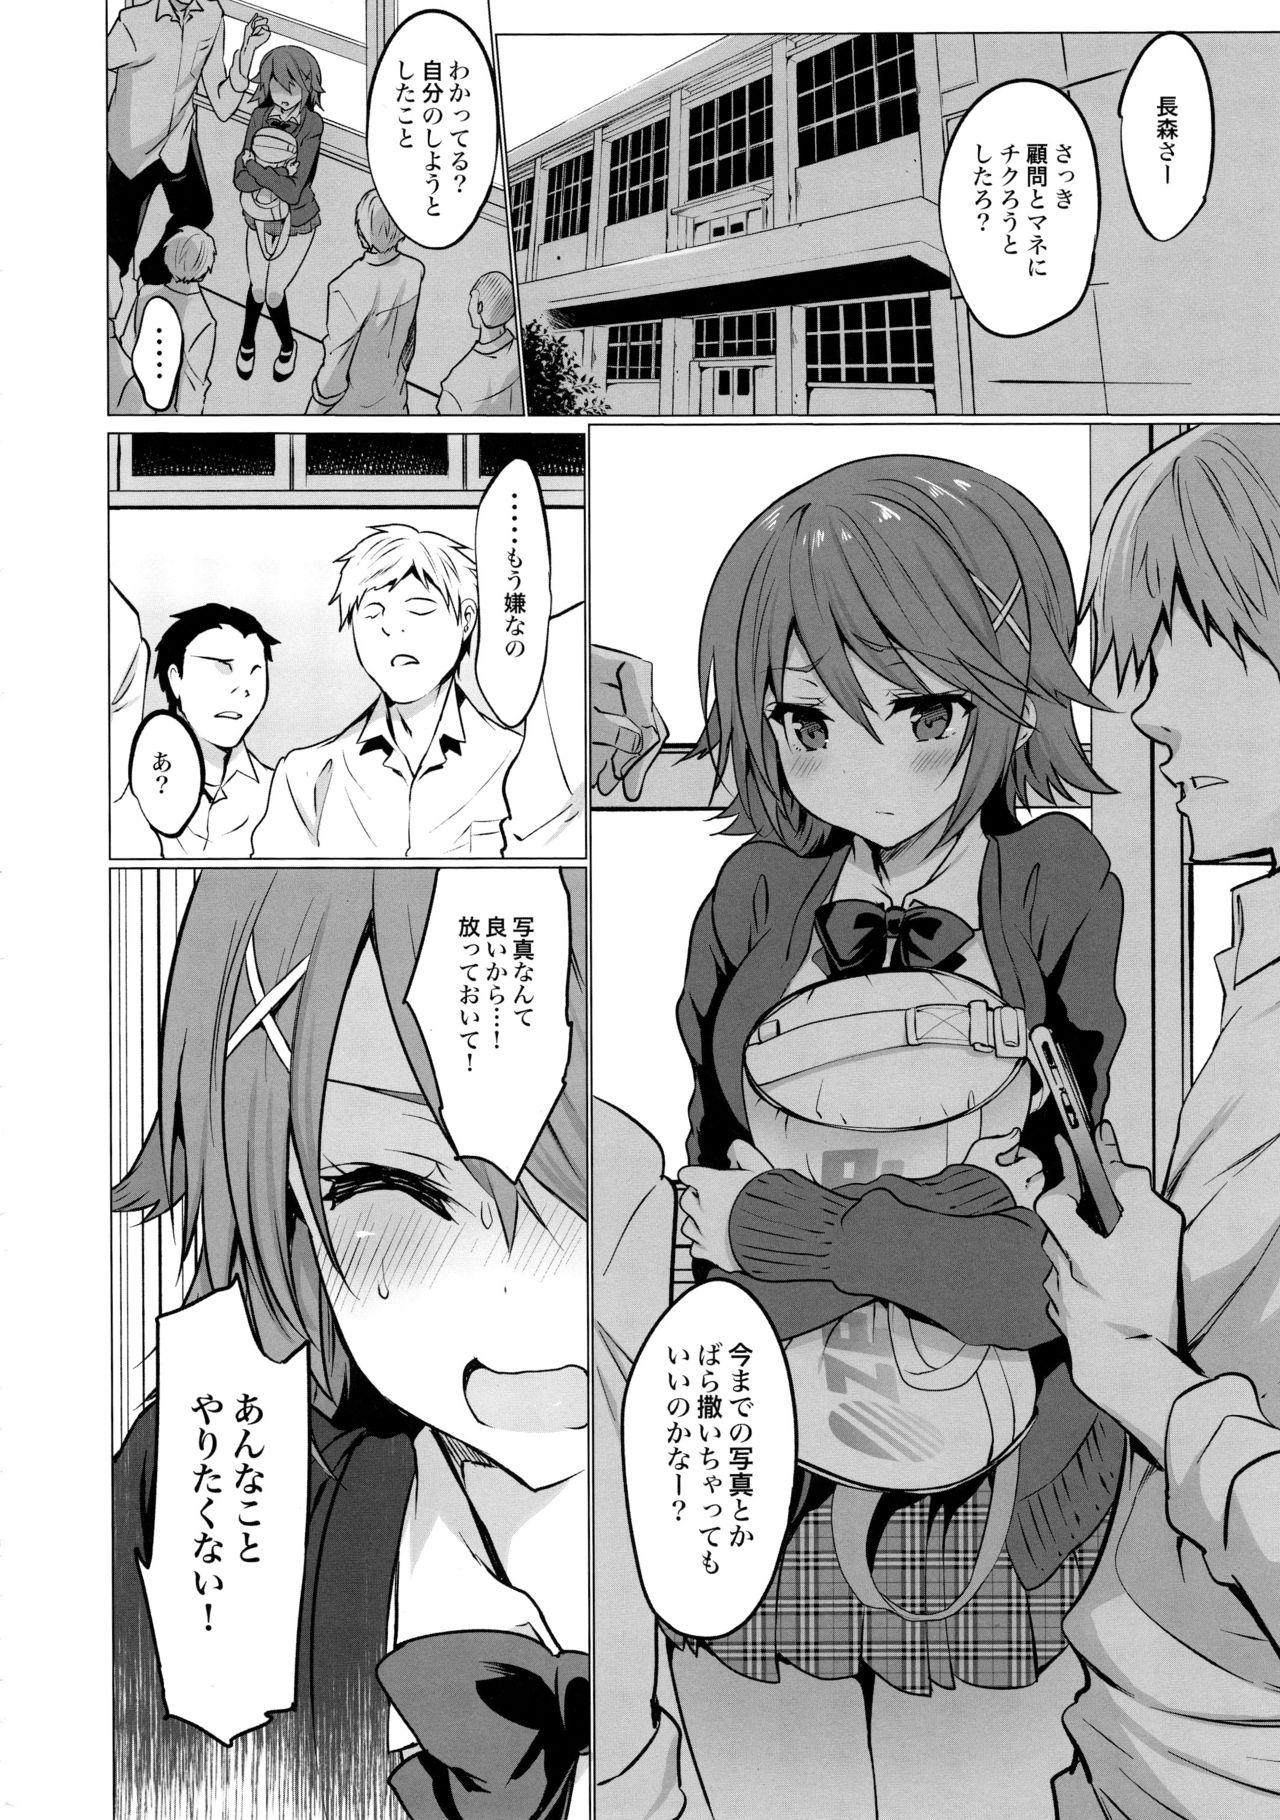 Penis Gakkou de Seishun! 16 - Original Blows - Page 6